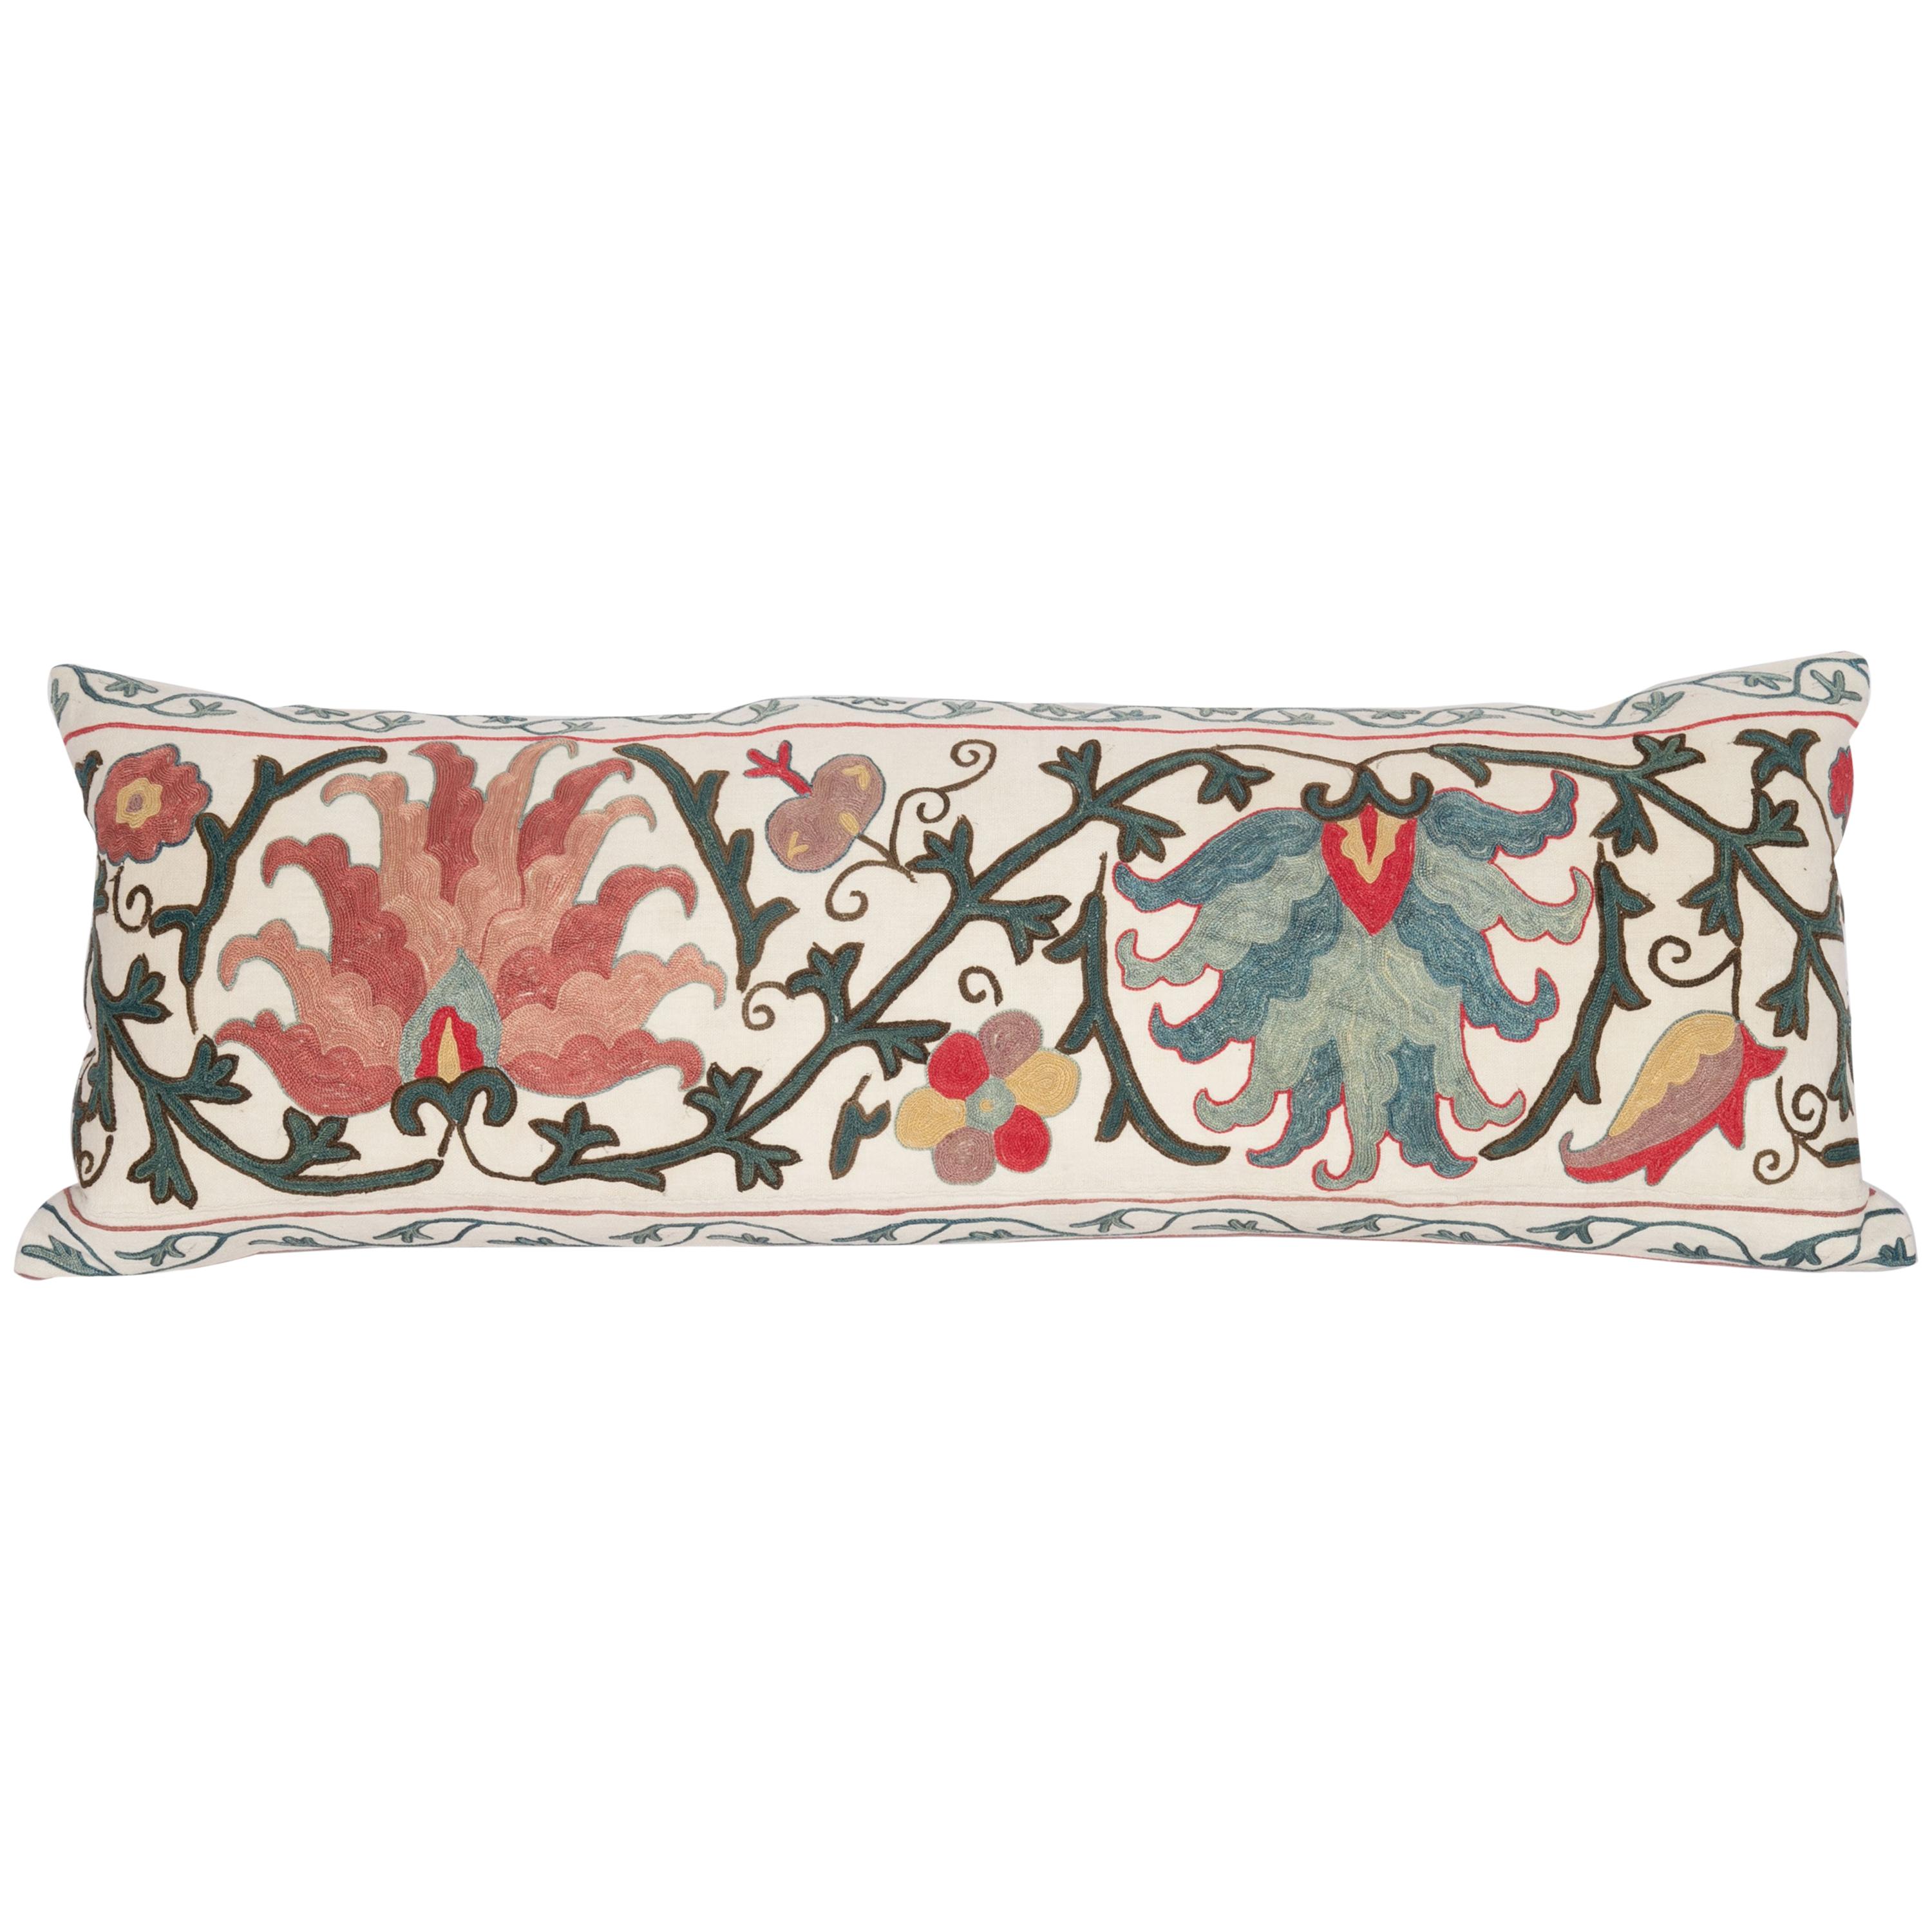 Antique Suzani Pillow Case Made from a 19th Century Suzani, Uzbekistan